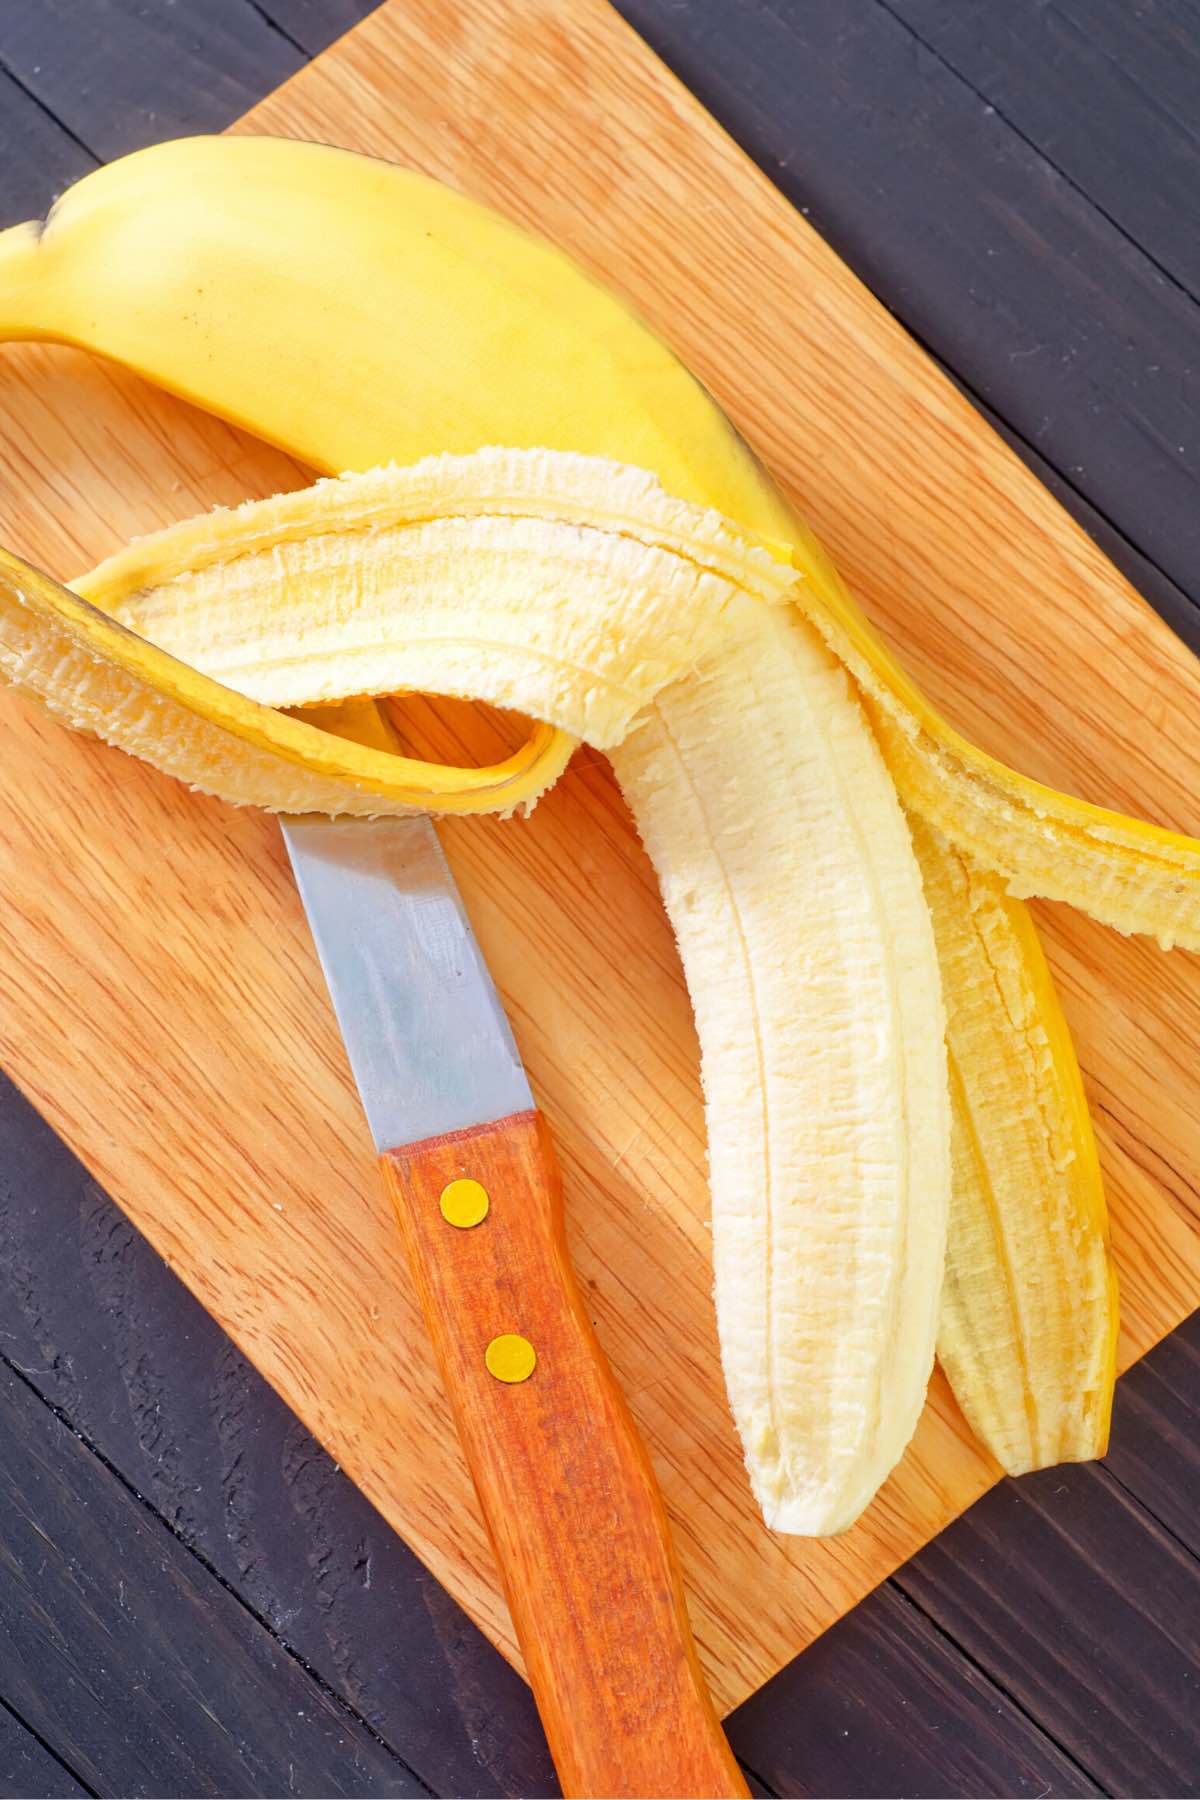 Peeling and slicing a ripe banana on a cutting board